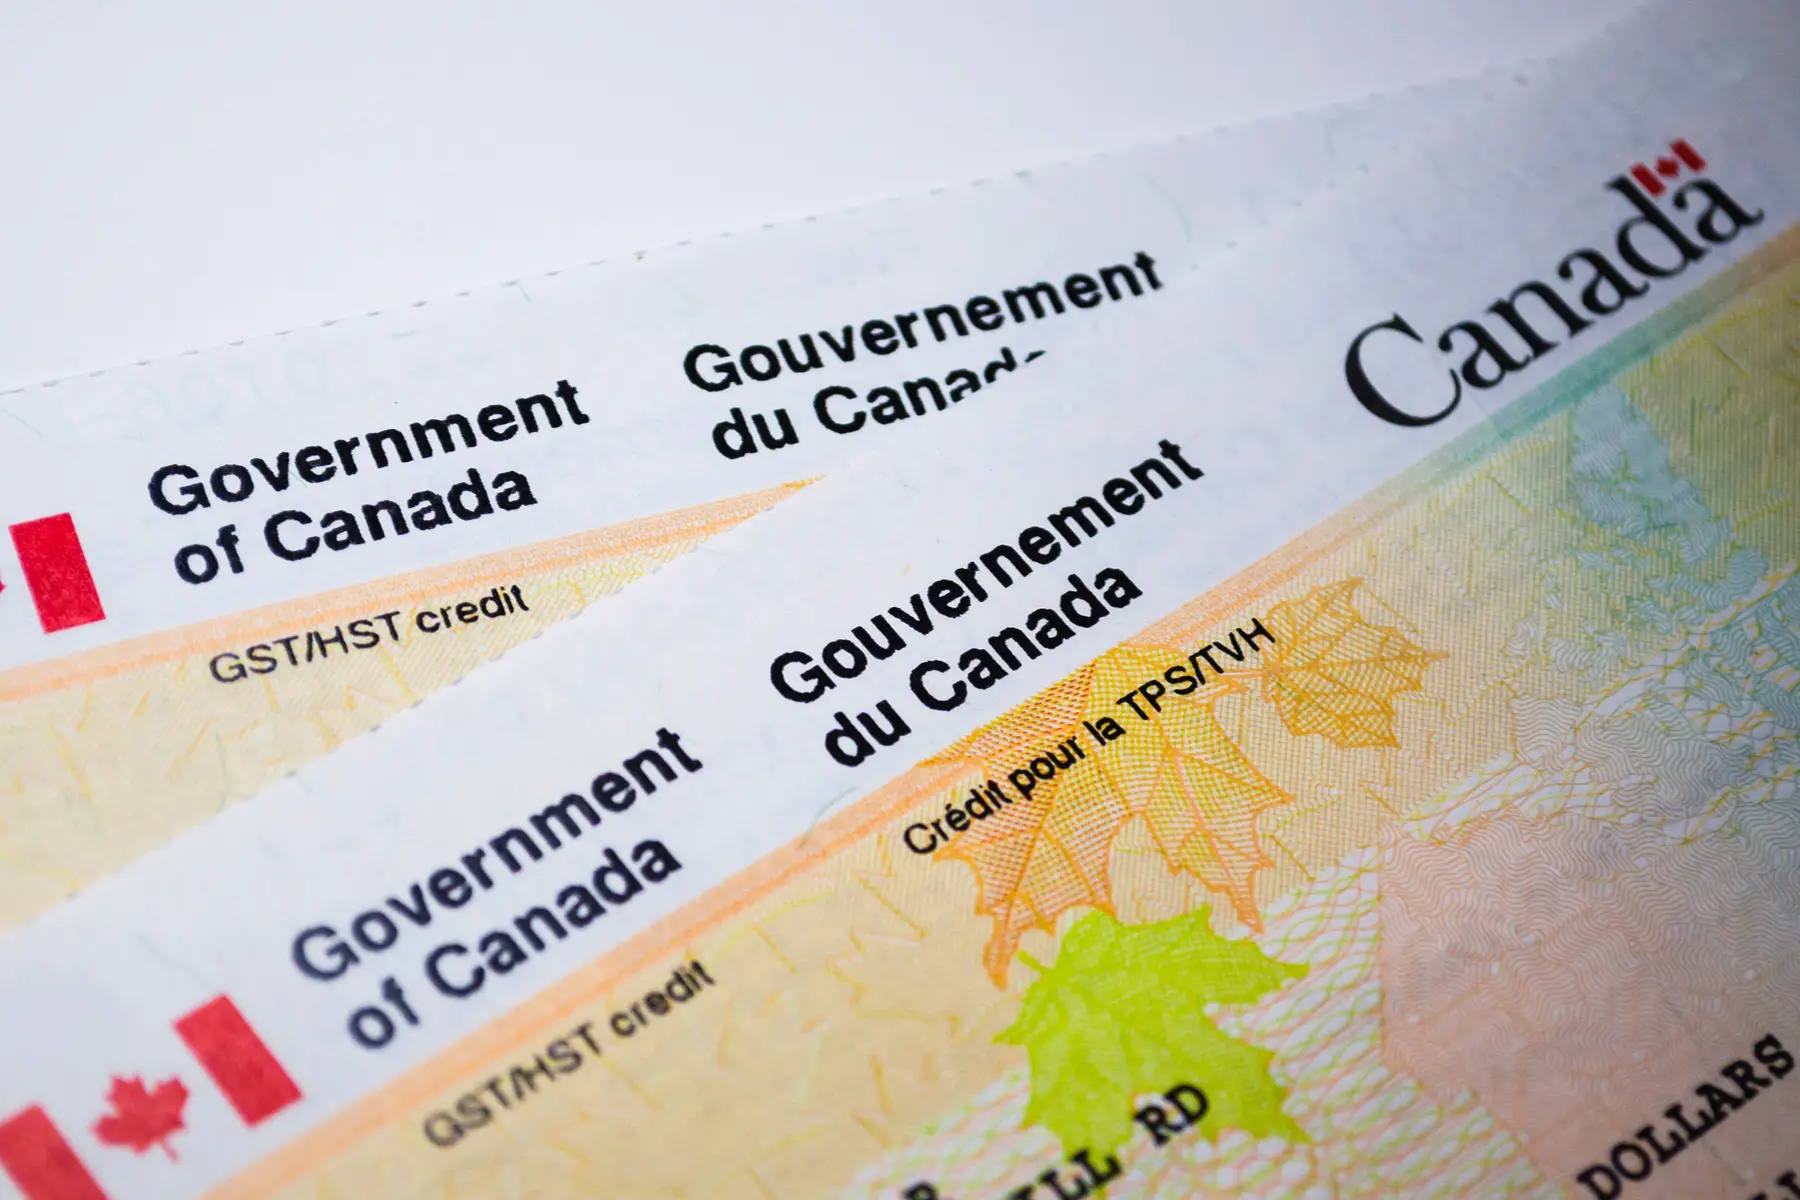 Canadian tax GST/HST credits